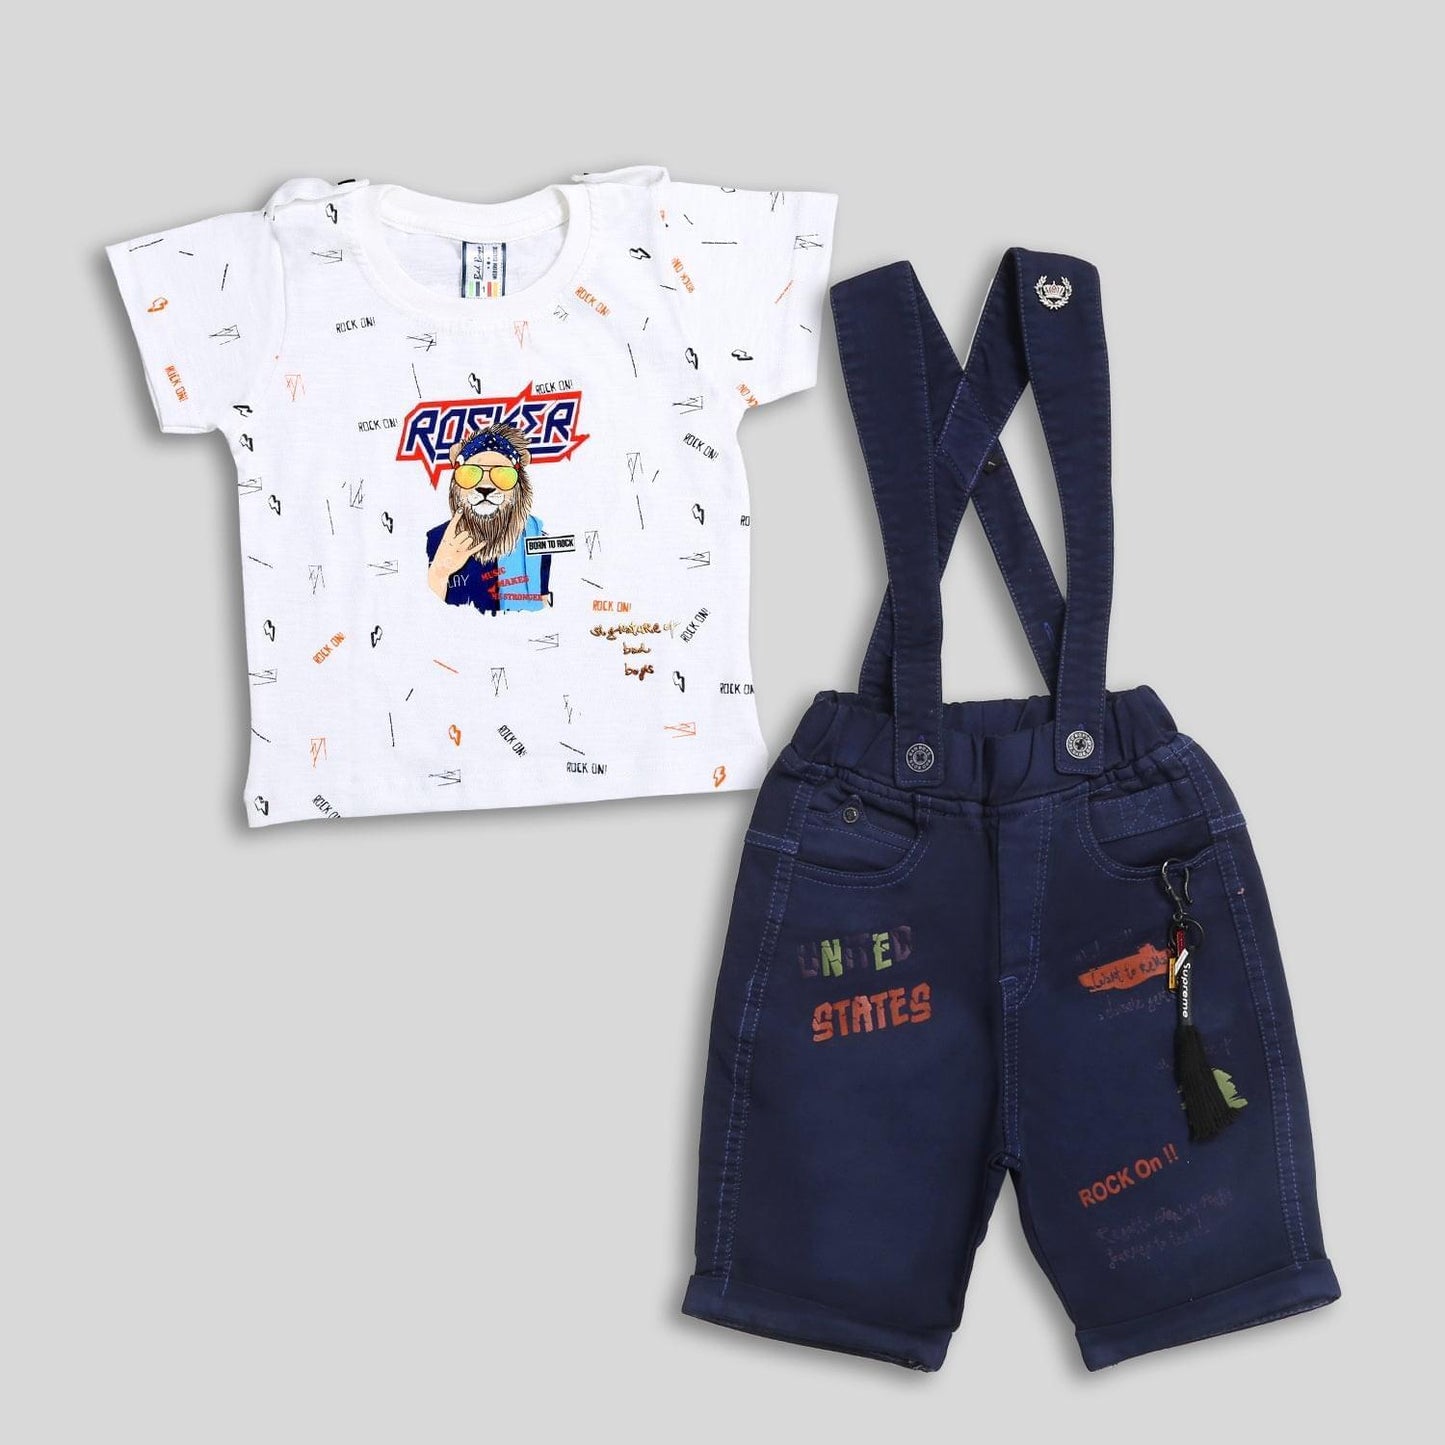 Casual Suspender set for little boys